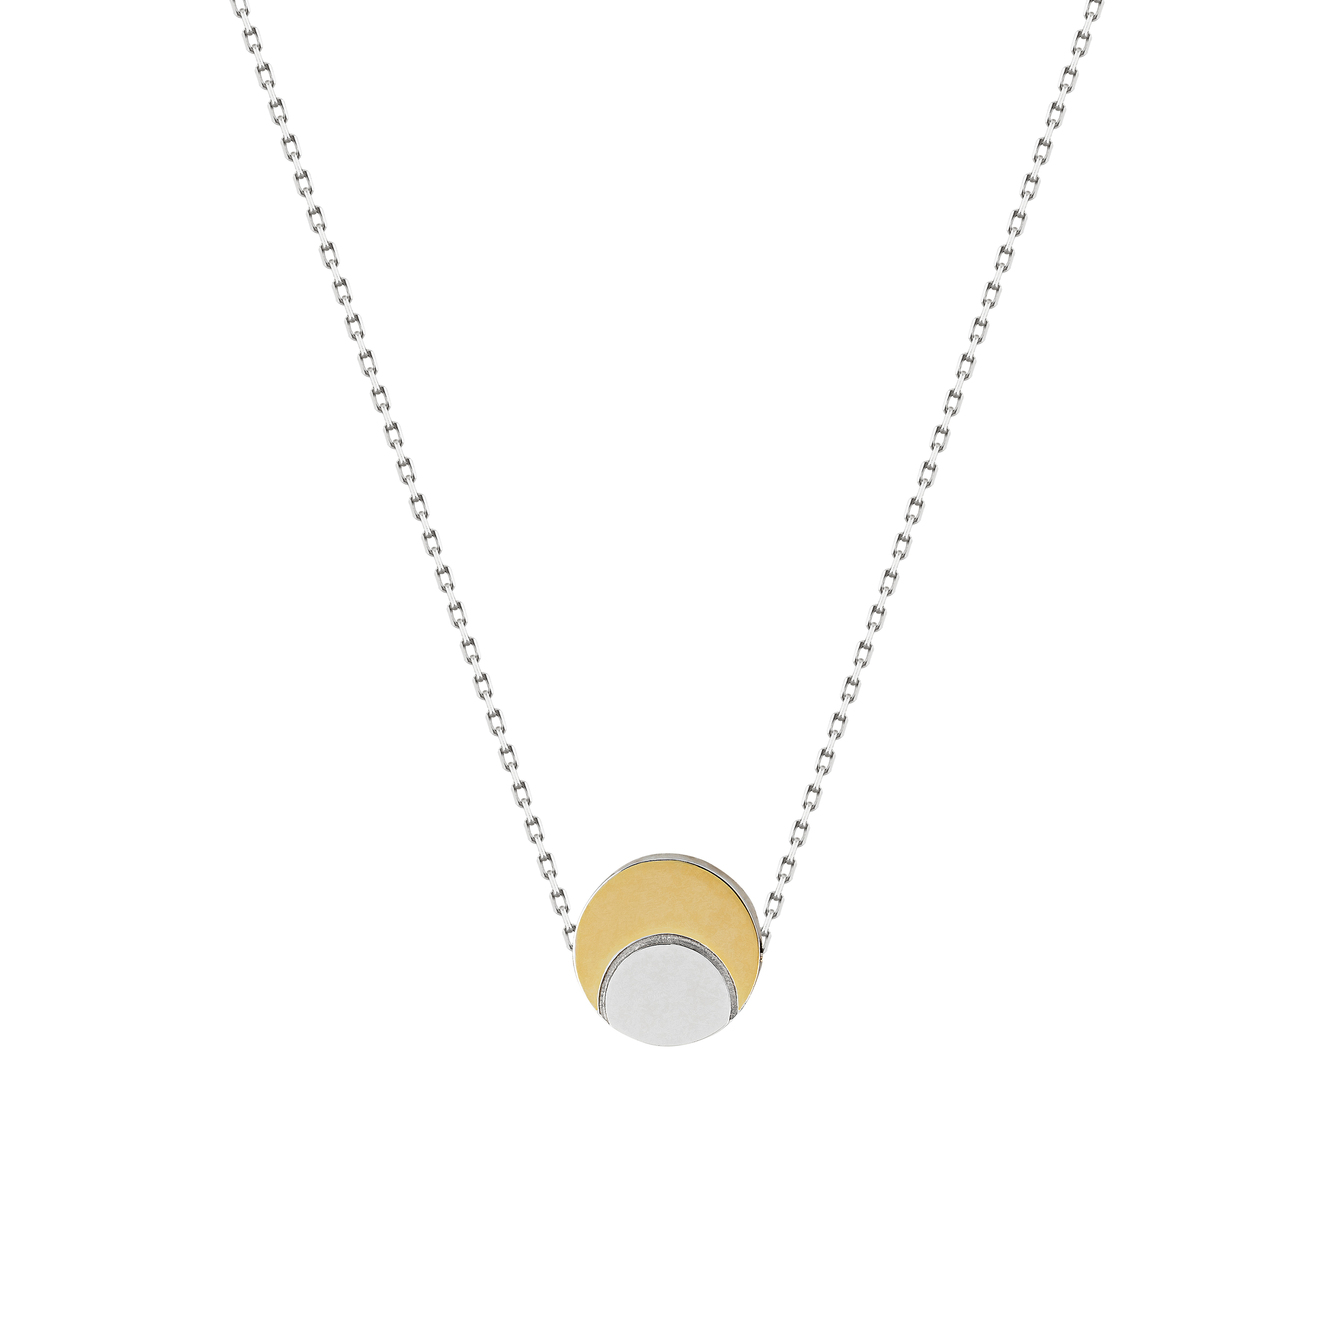 LUSIN Jewelry Биколорное колье с полумесяцем Moon Transformer Necklace из серебра